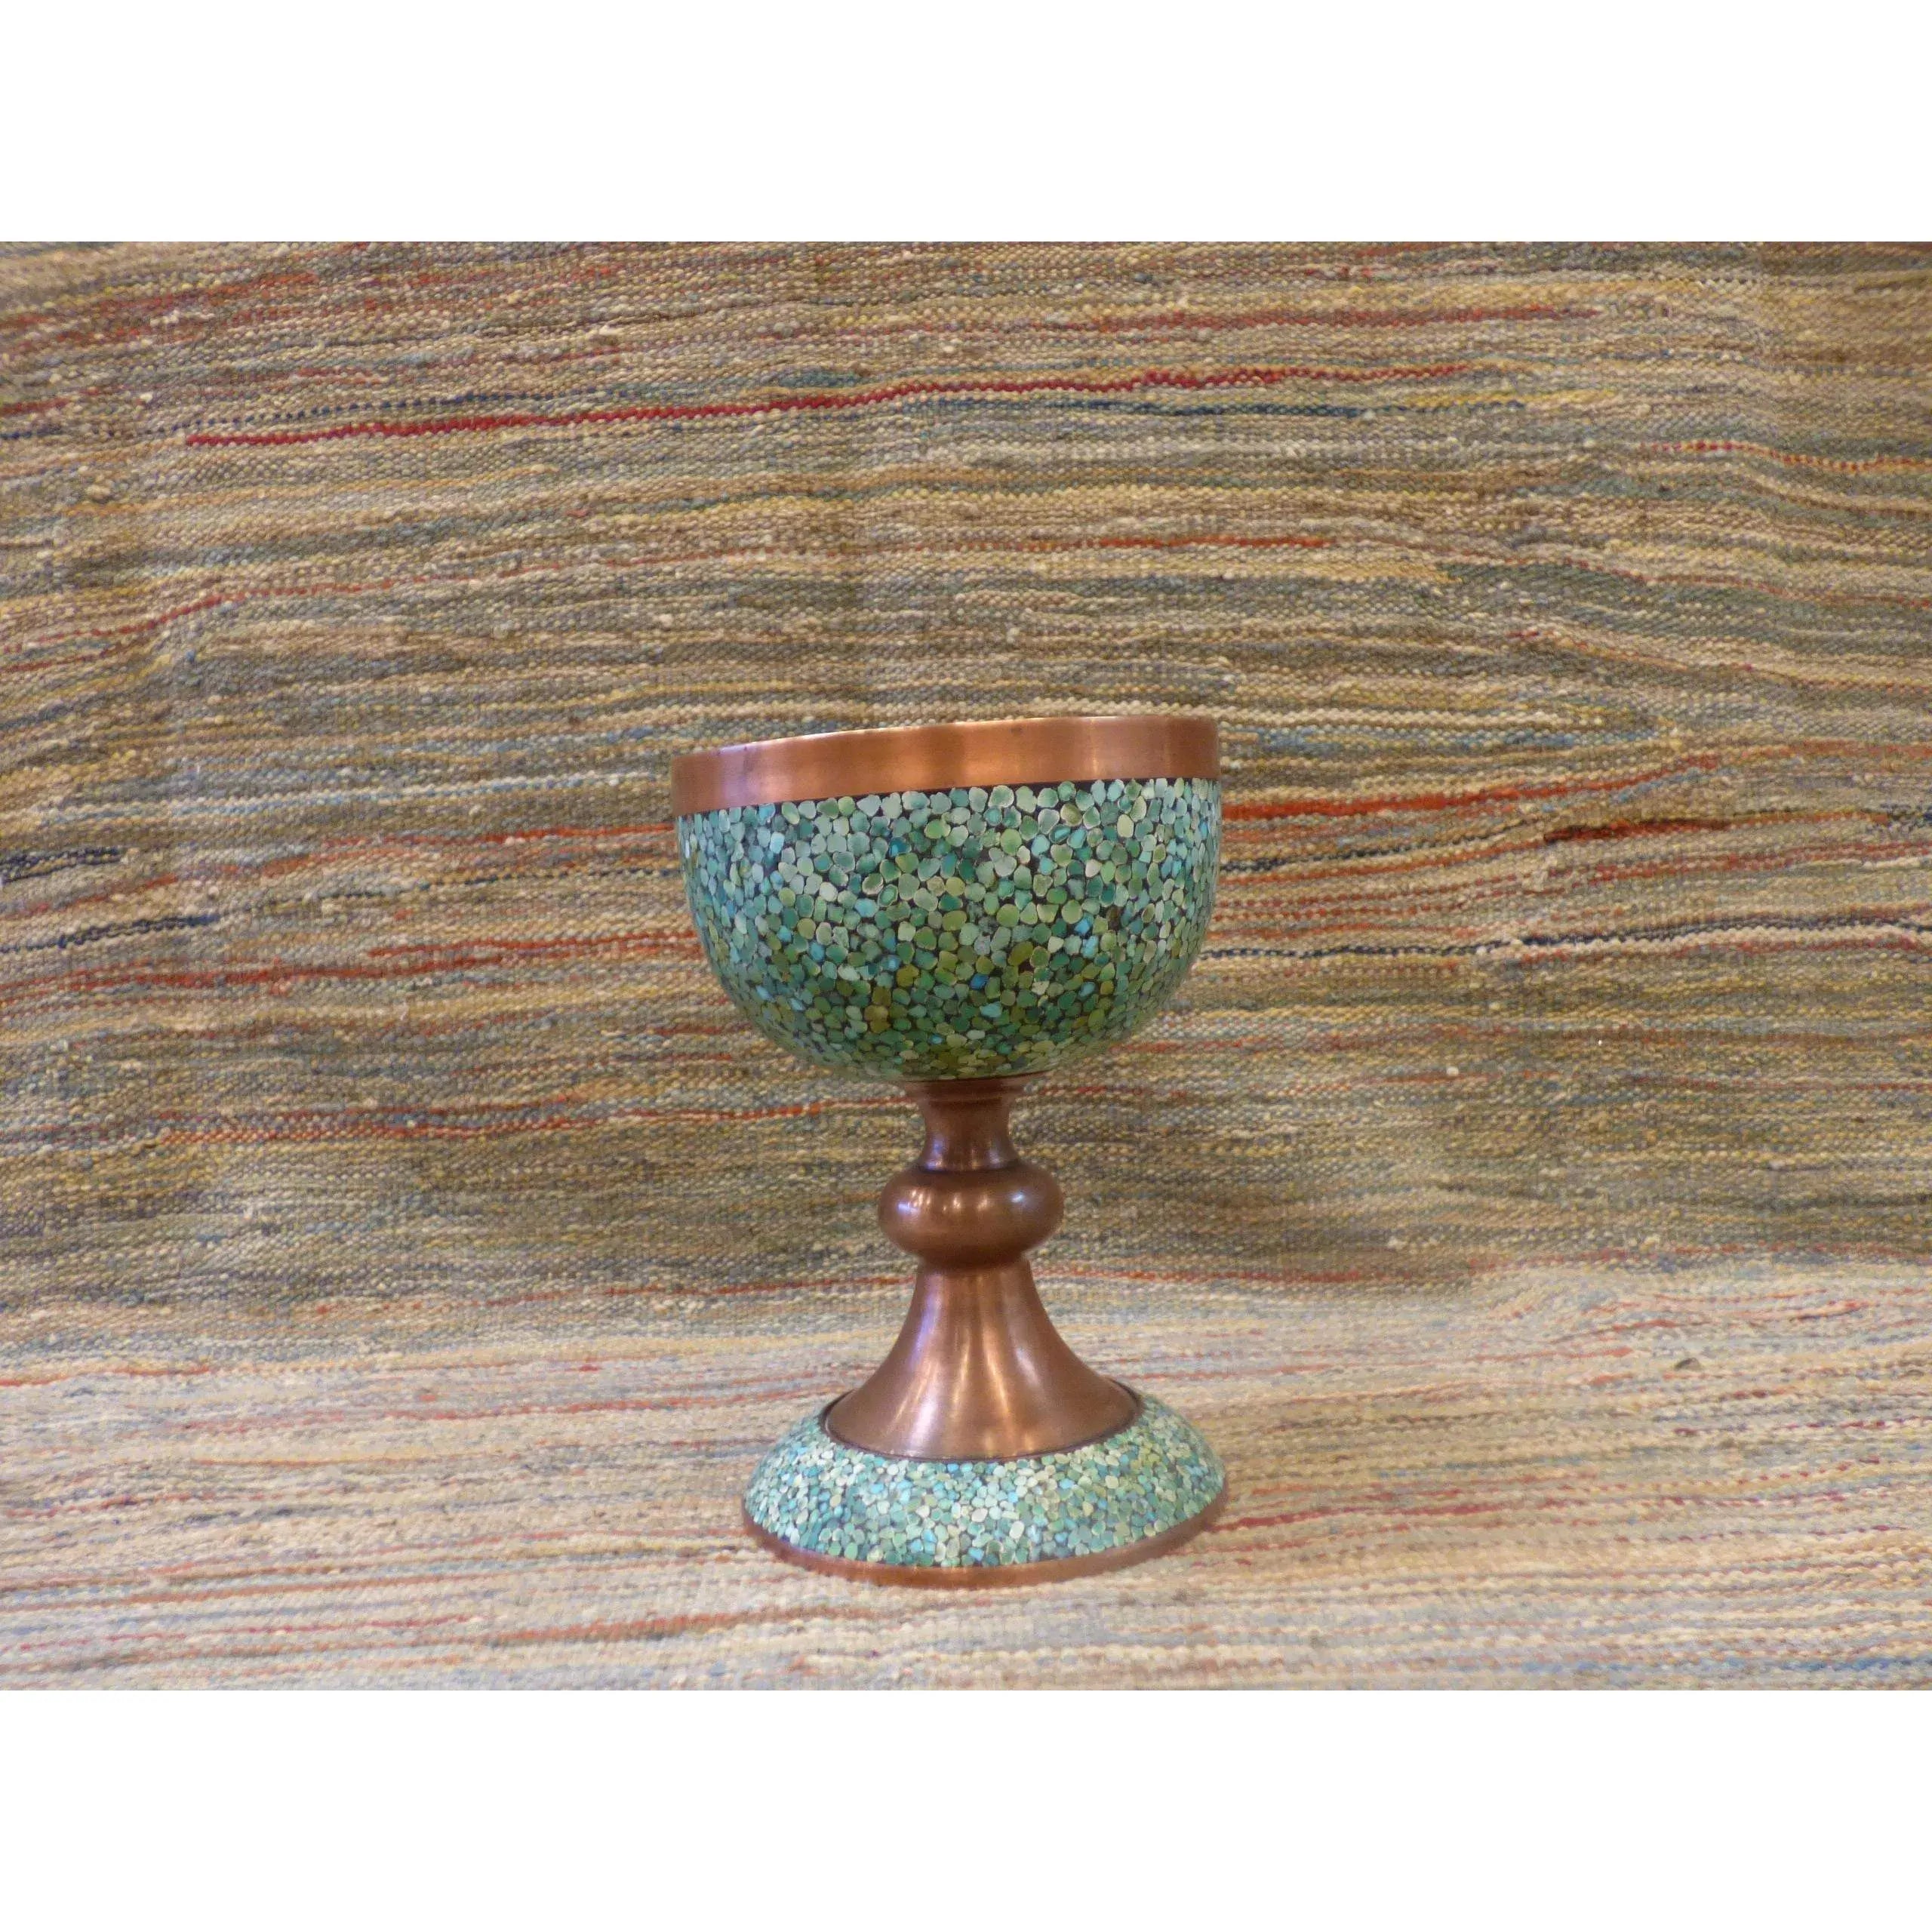 Authentic Art Antique Persian Engraved Brass Vase Ghalamzani 8" X 11" Abcca0103